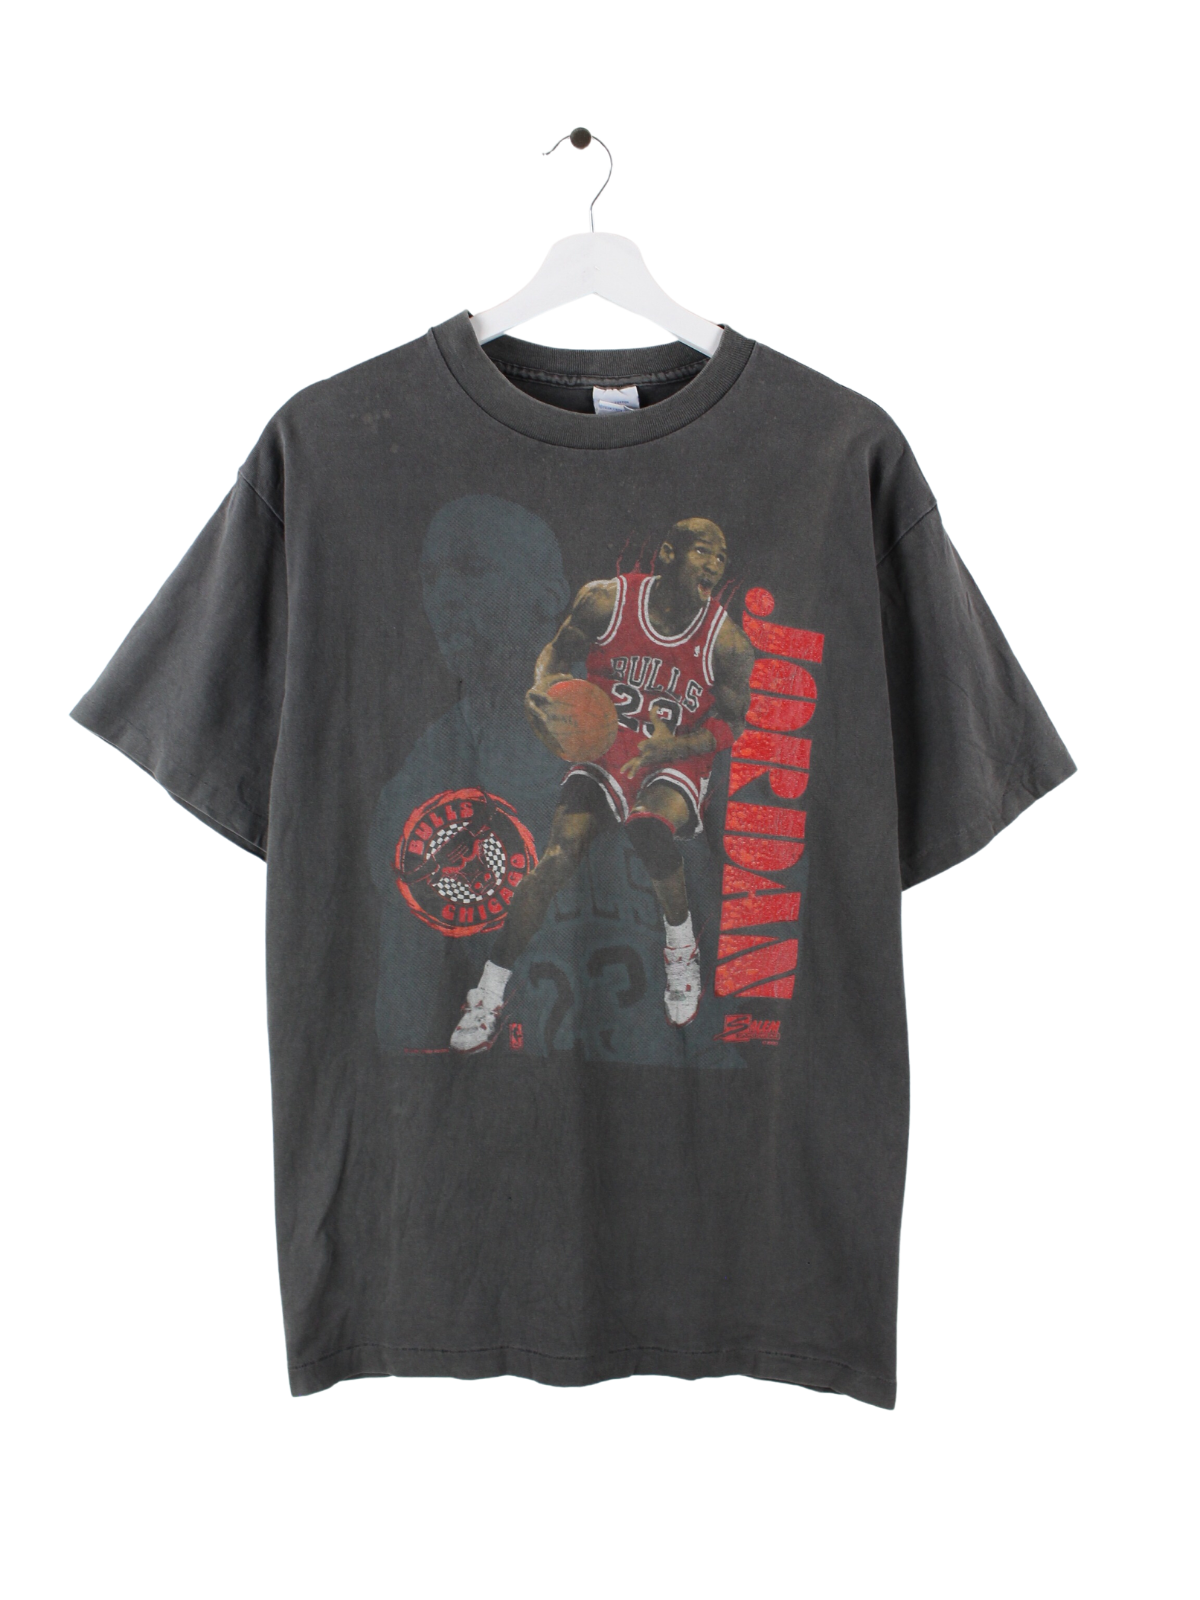 Salem Sportswear 1990 Michael Jordan T-Shirt Gray M